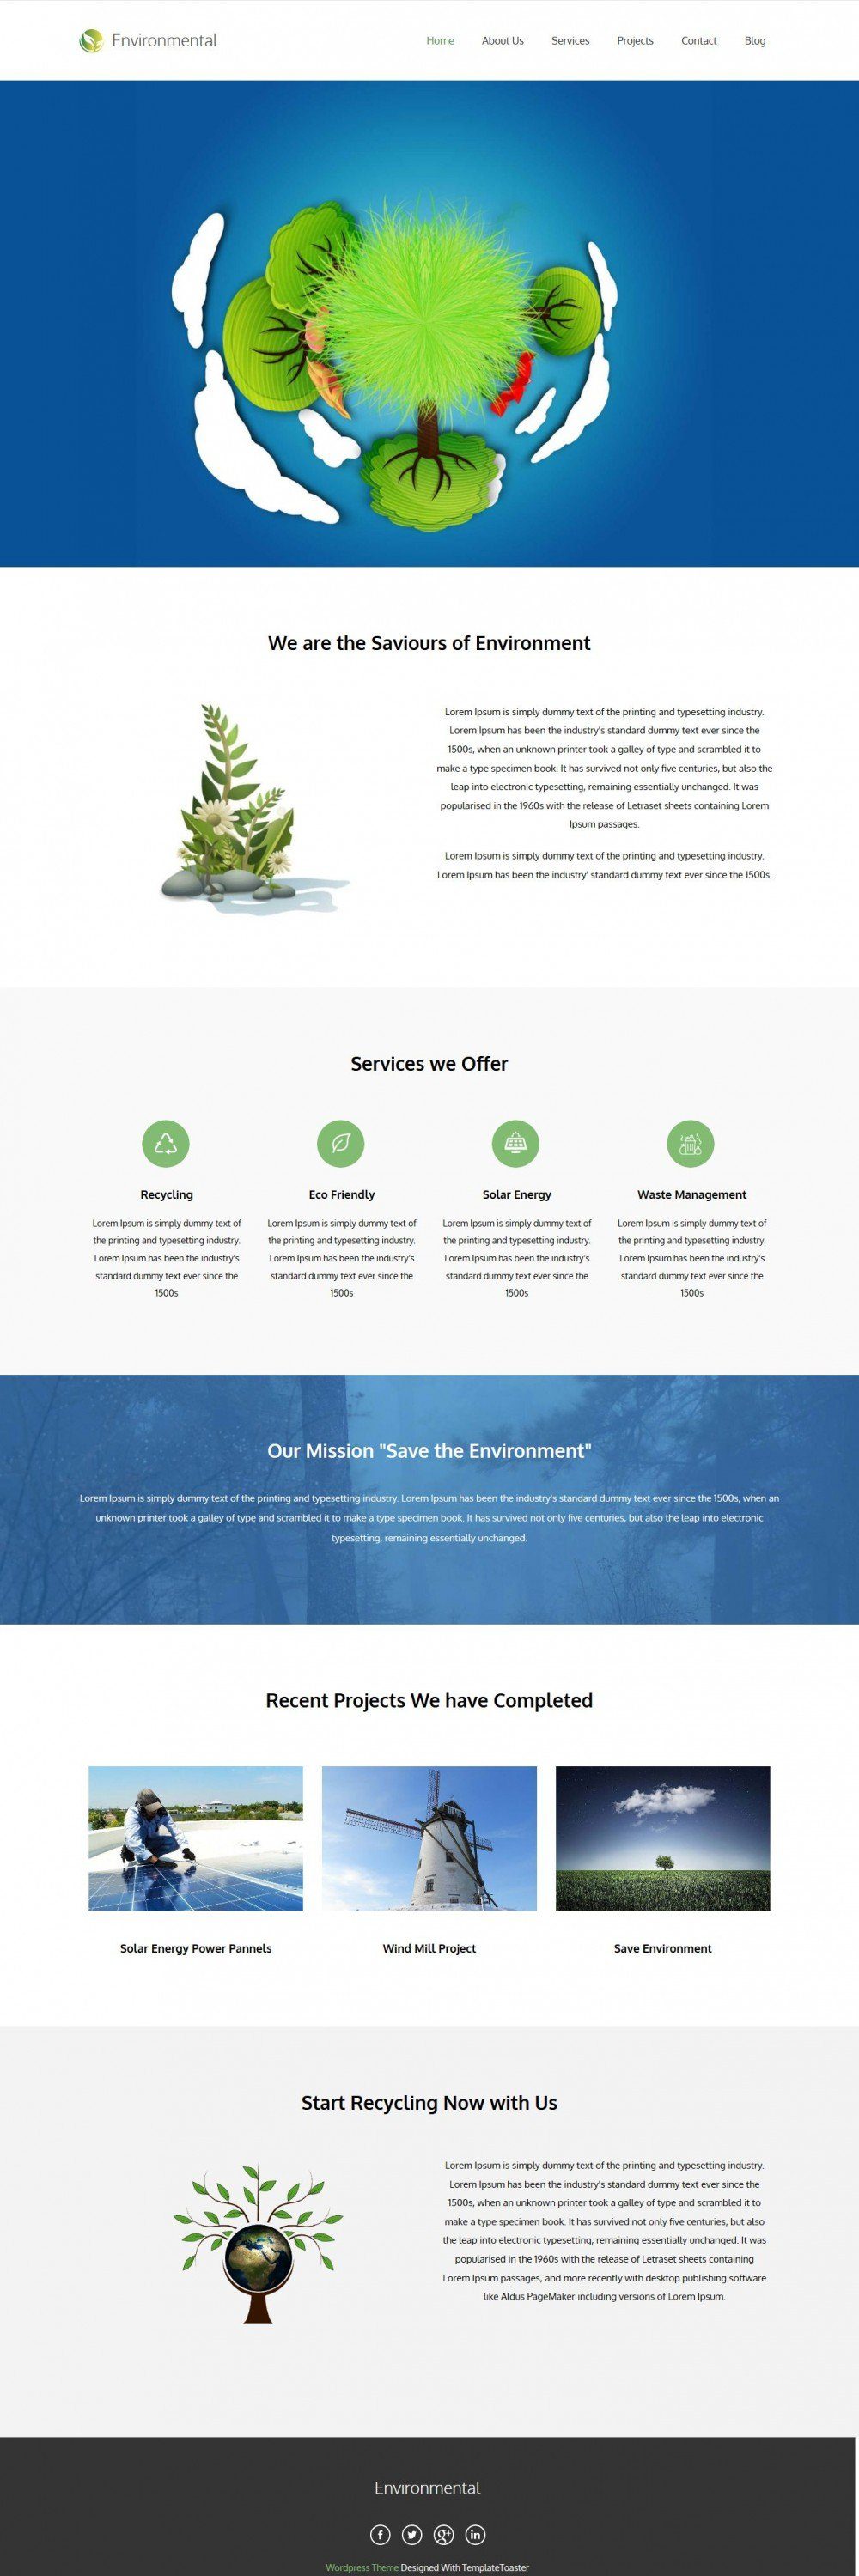 Environmental - Environment/Nature WordPress Theme